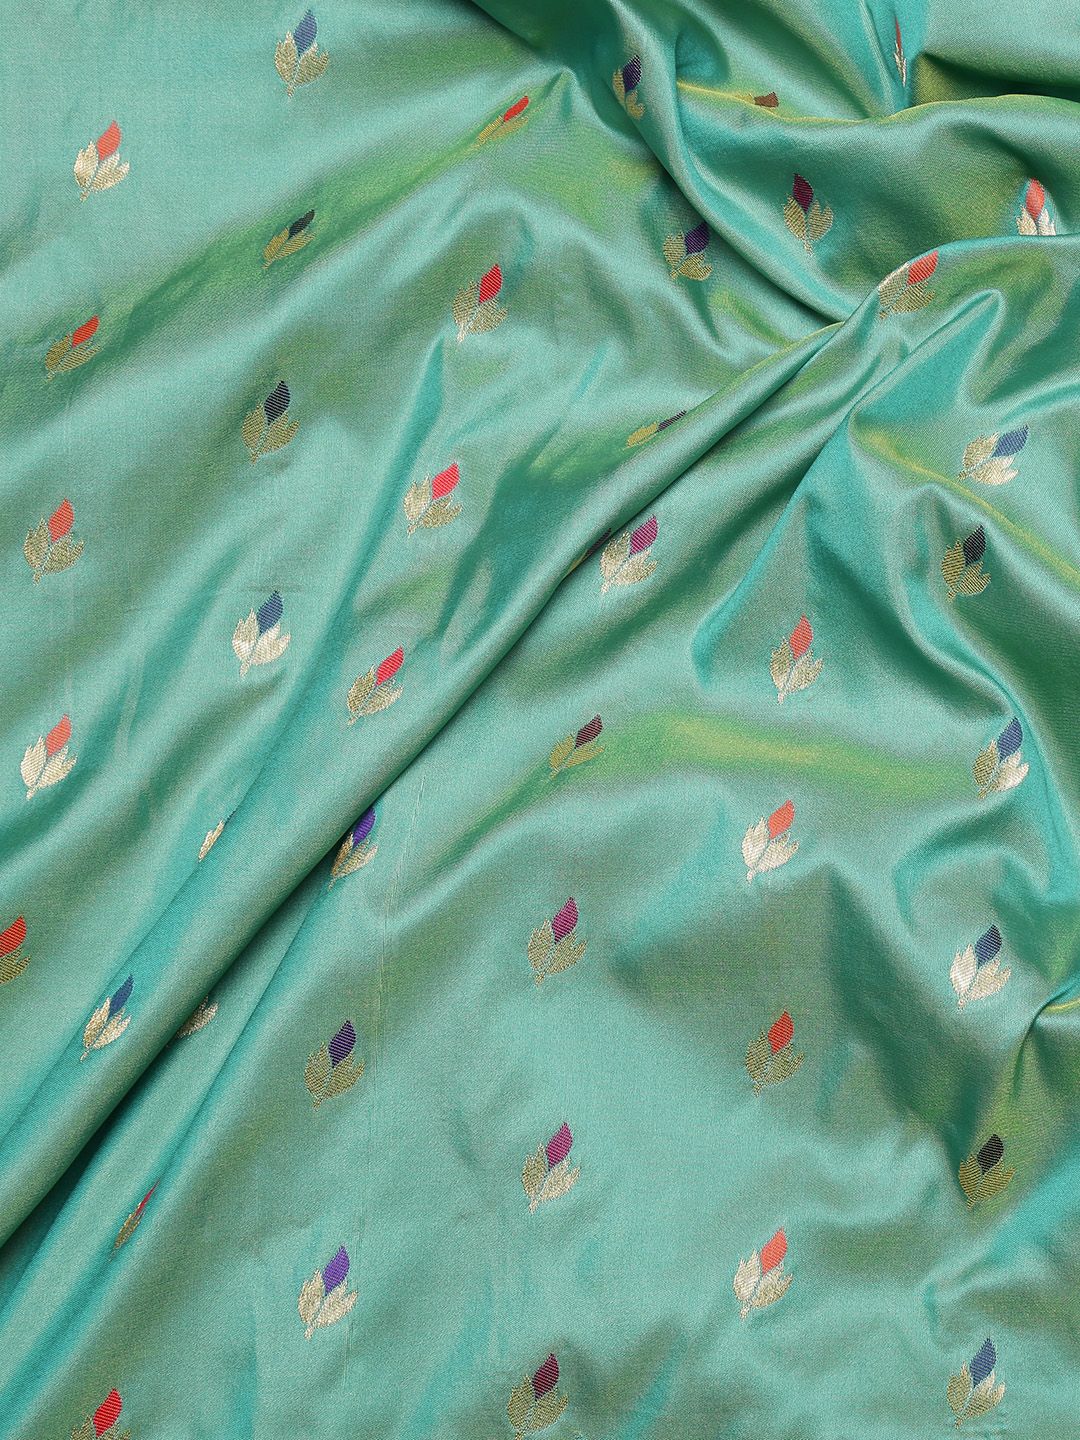 sea green best multicolor meenawork zariweaving banarasi saree for woman